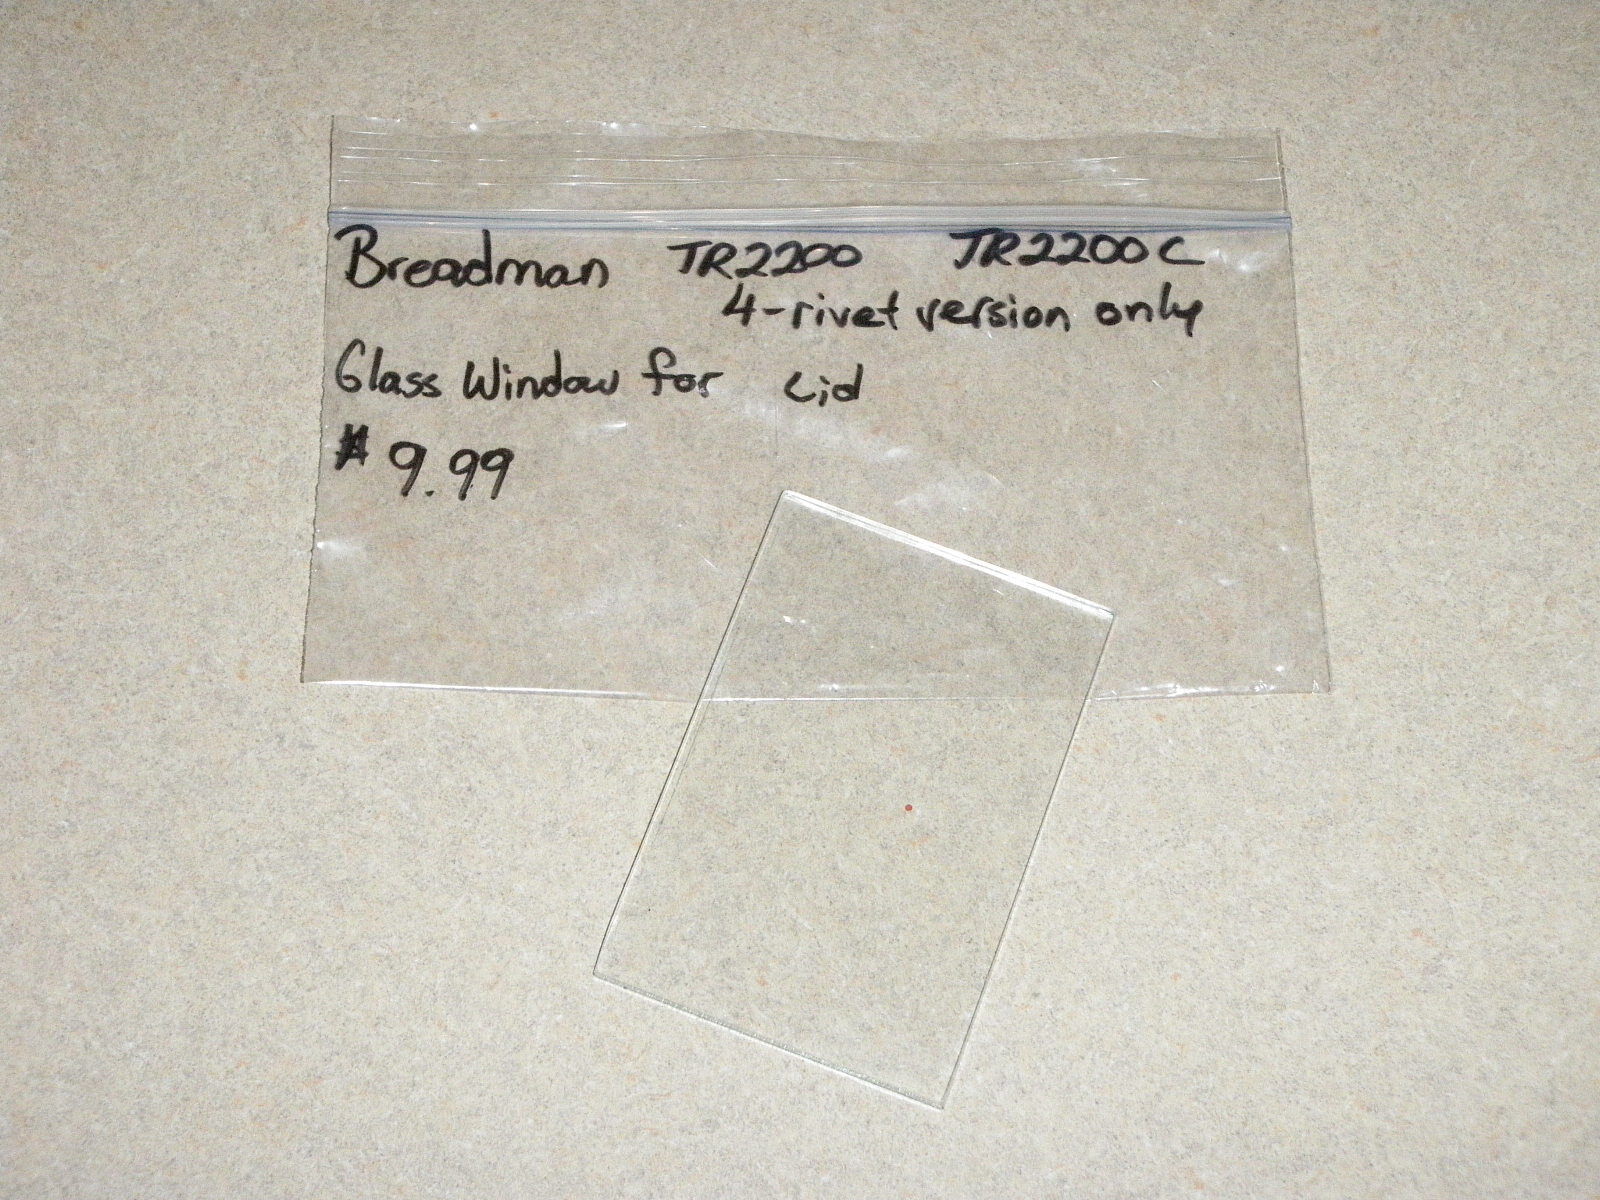 Breadman Bread Machine Glass Window For Lid TR2200 TR2200C (4-rivet only)